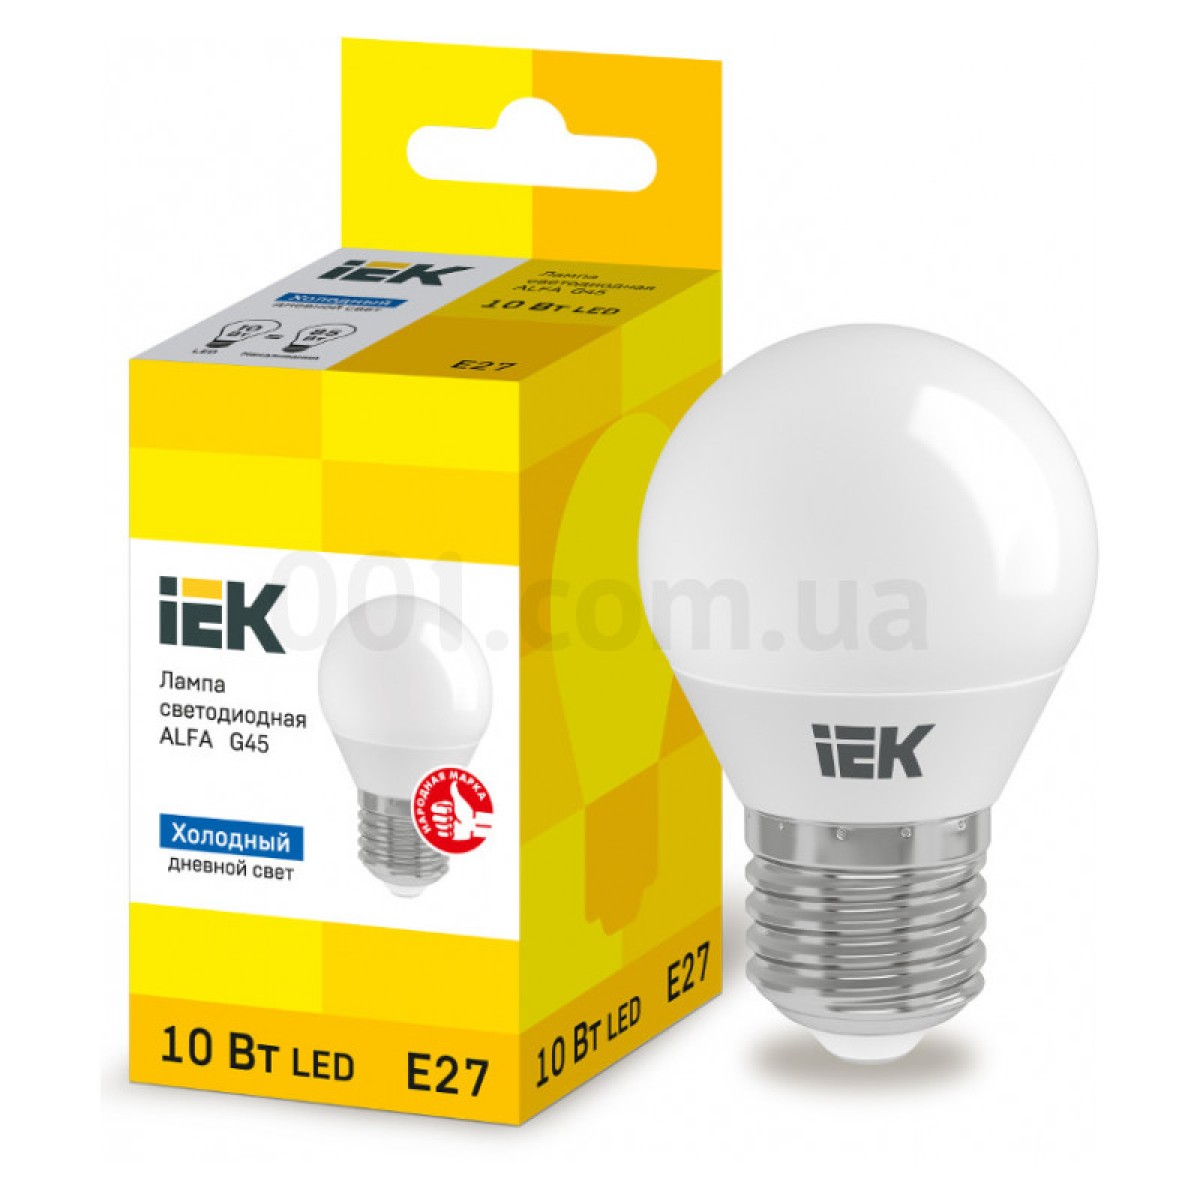 Светодиодная лампа LED ALFA G45 (шар) 10 Вт 230В 6500К E27, IEK 256_256.jpg